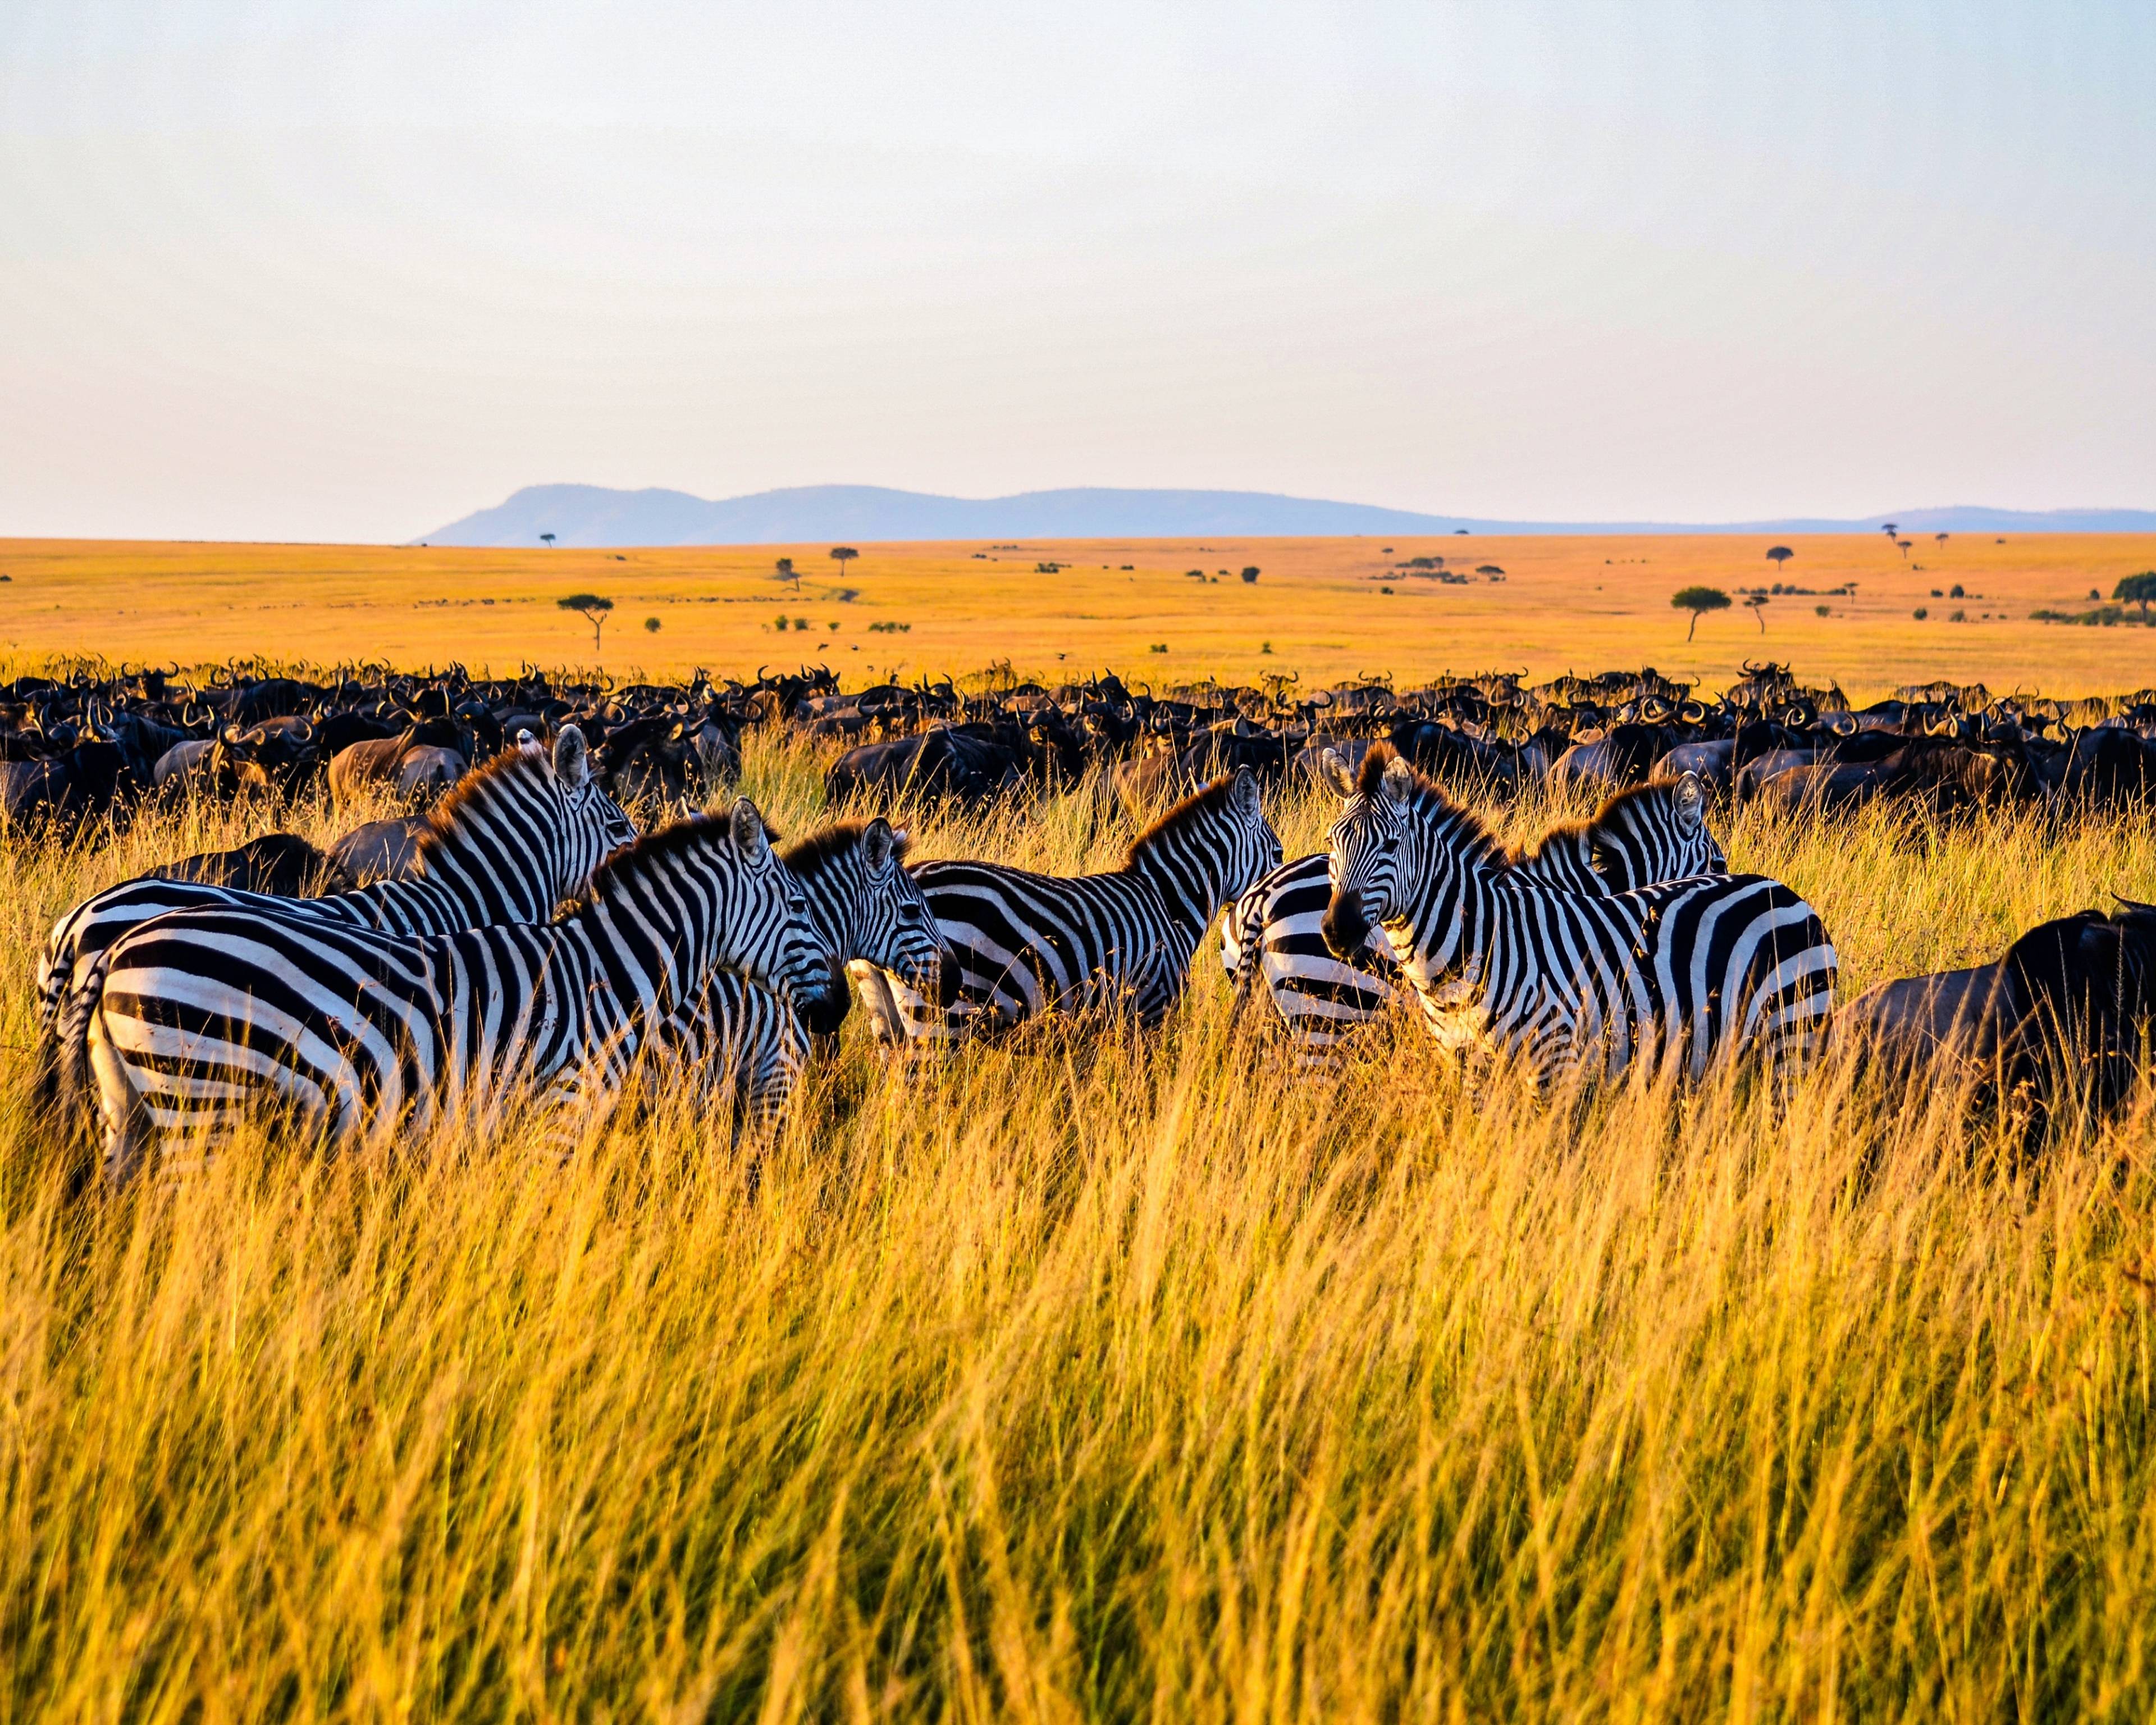 La asombrosa fauna de las praderas de sabana desde Maasai Mara hasta la marina rosa del lago Amboseli